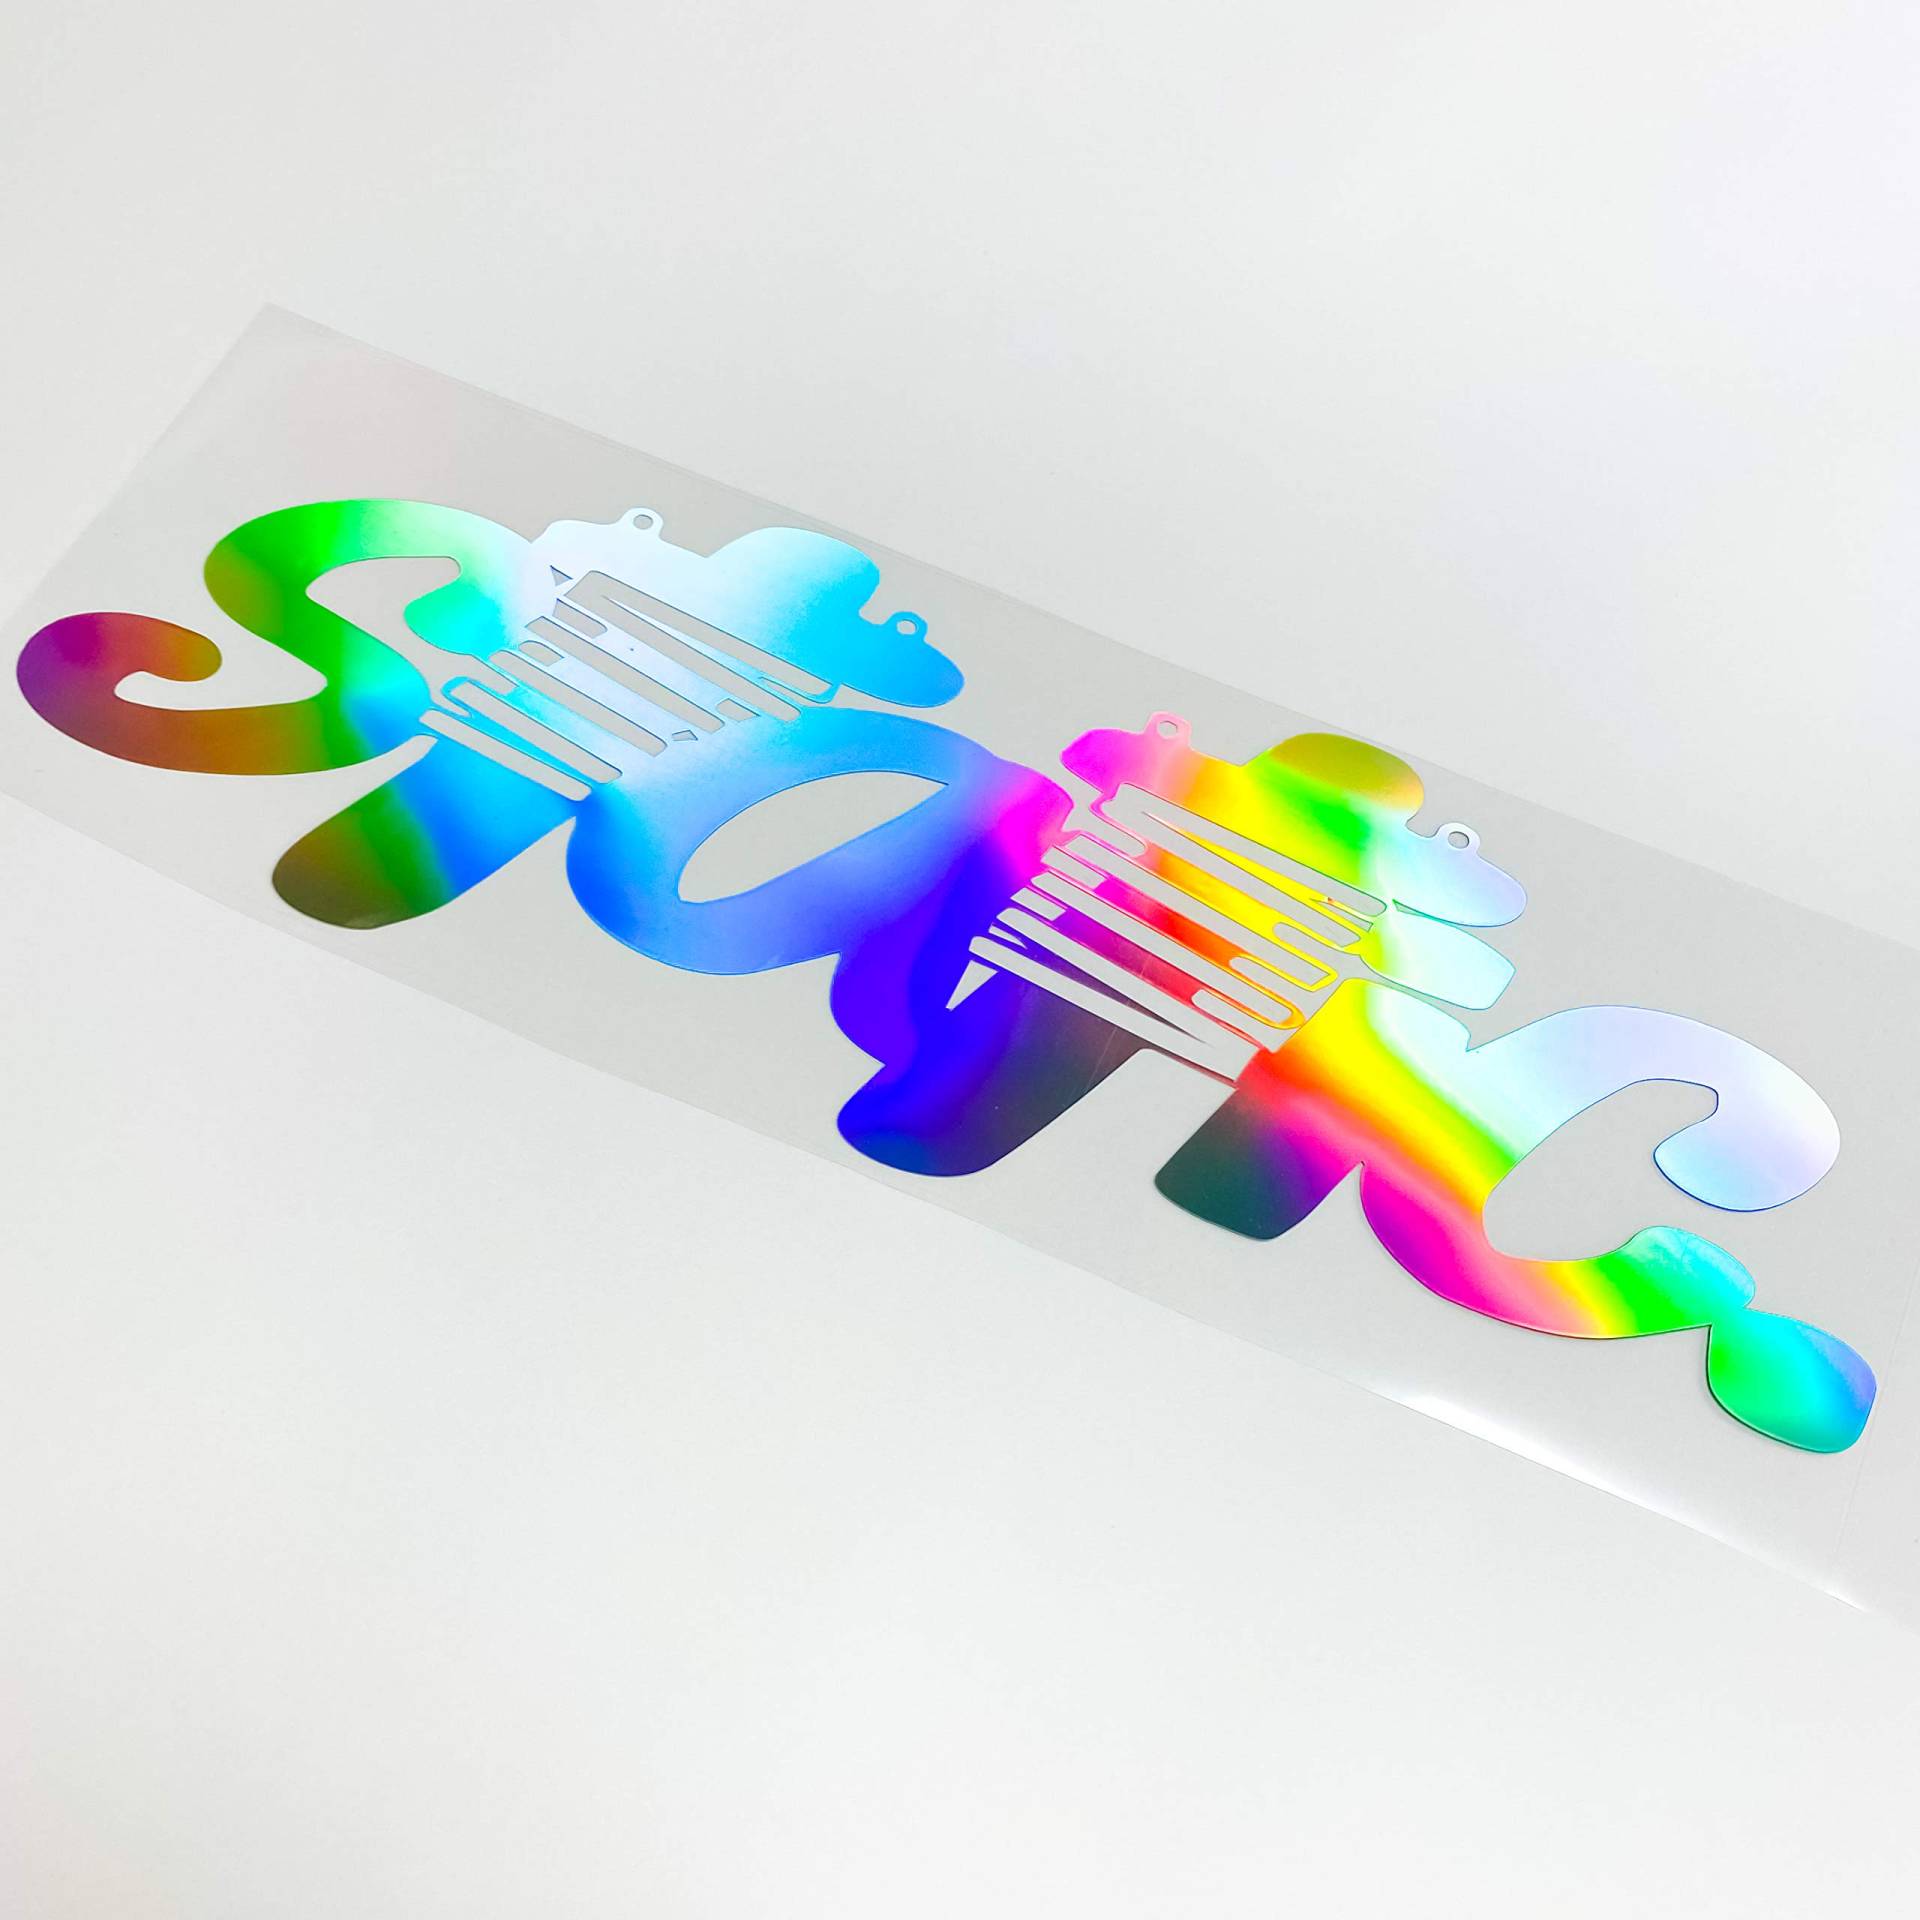 Static Autoaufkleber Oilslick Hologramm Aufkleber Tuningsticker Regenbogenfarben Sticker Slickoil (Hologramm Rosegold, 60 cm) von 1A Style Sticker